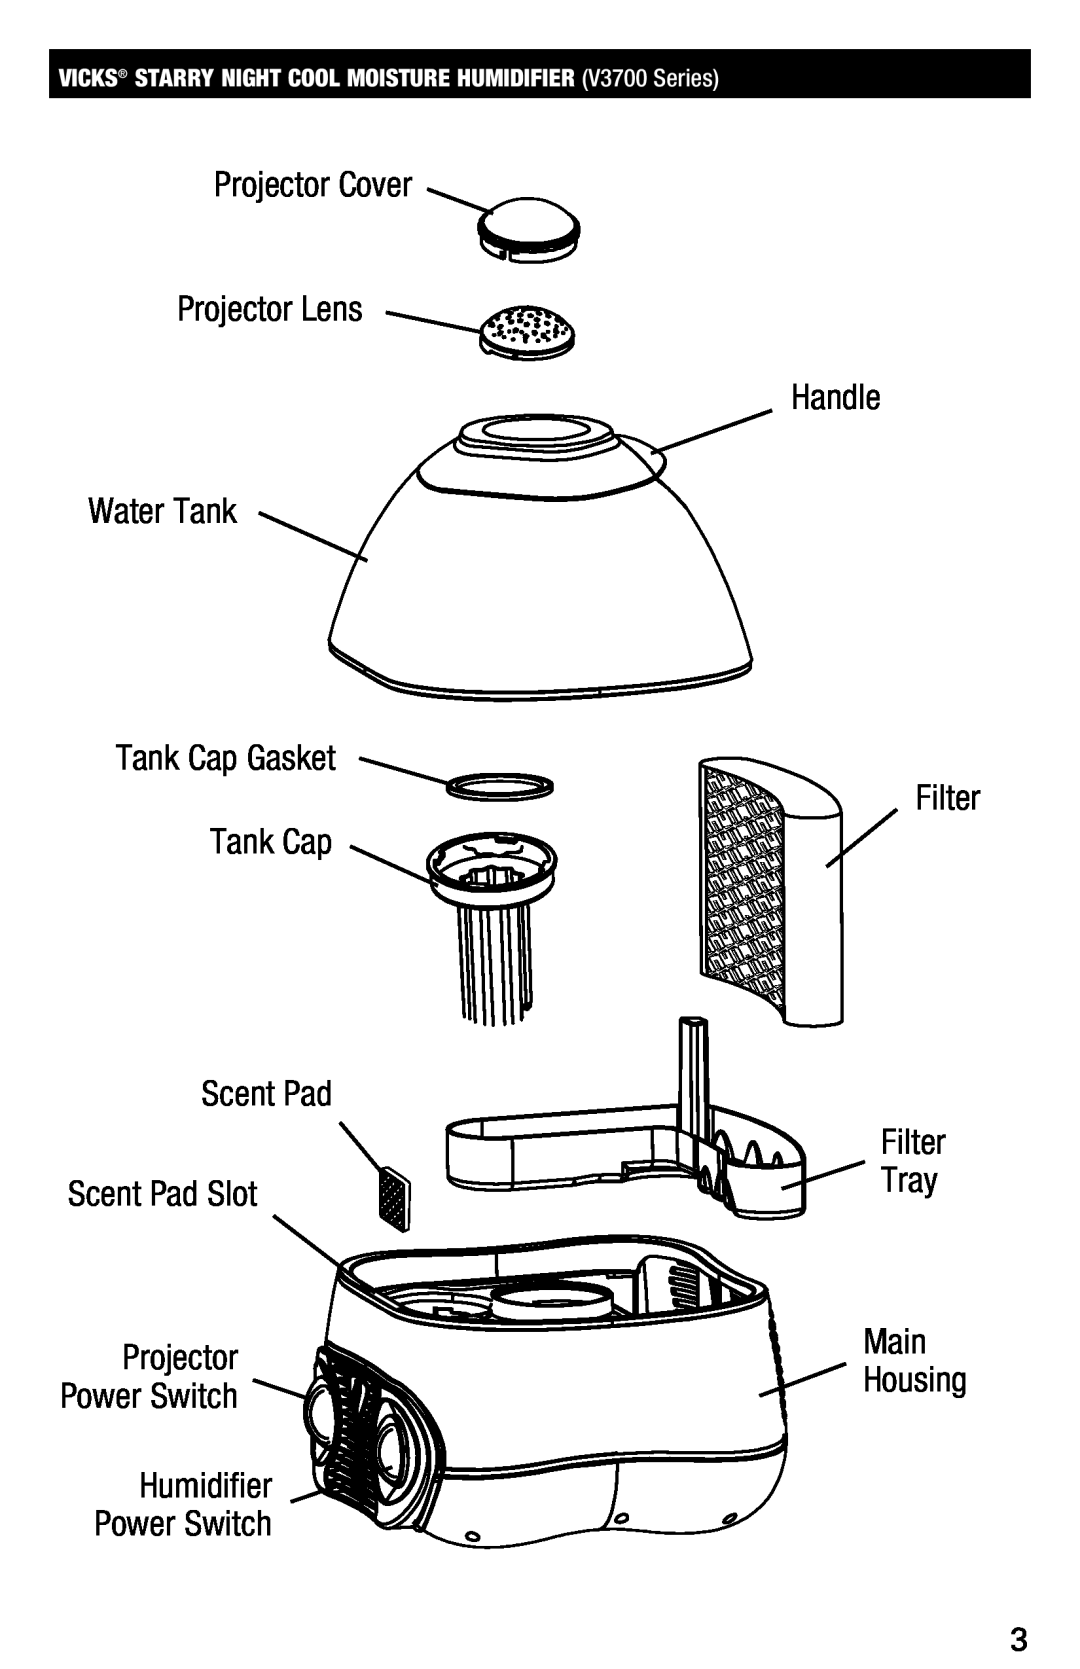 Vicks V3700 manual Projector Cover Projector Lens Water Tank Tank Cap Gasket Tank Cap, Power Switch 